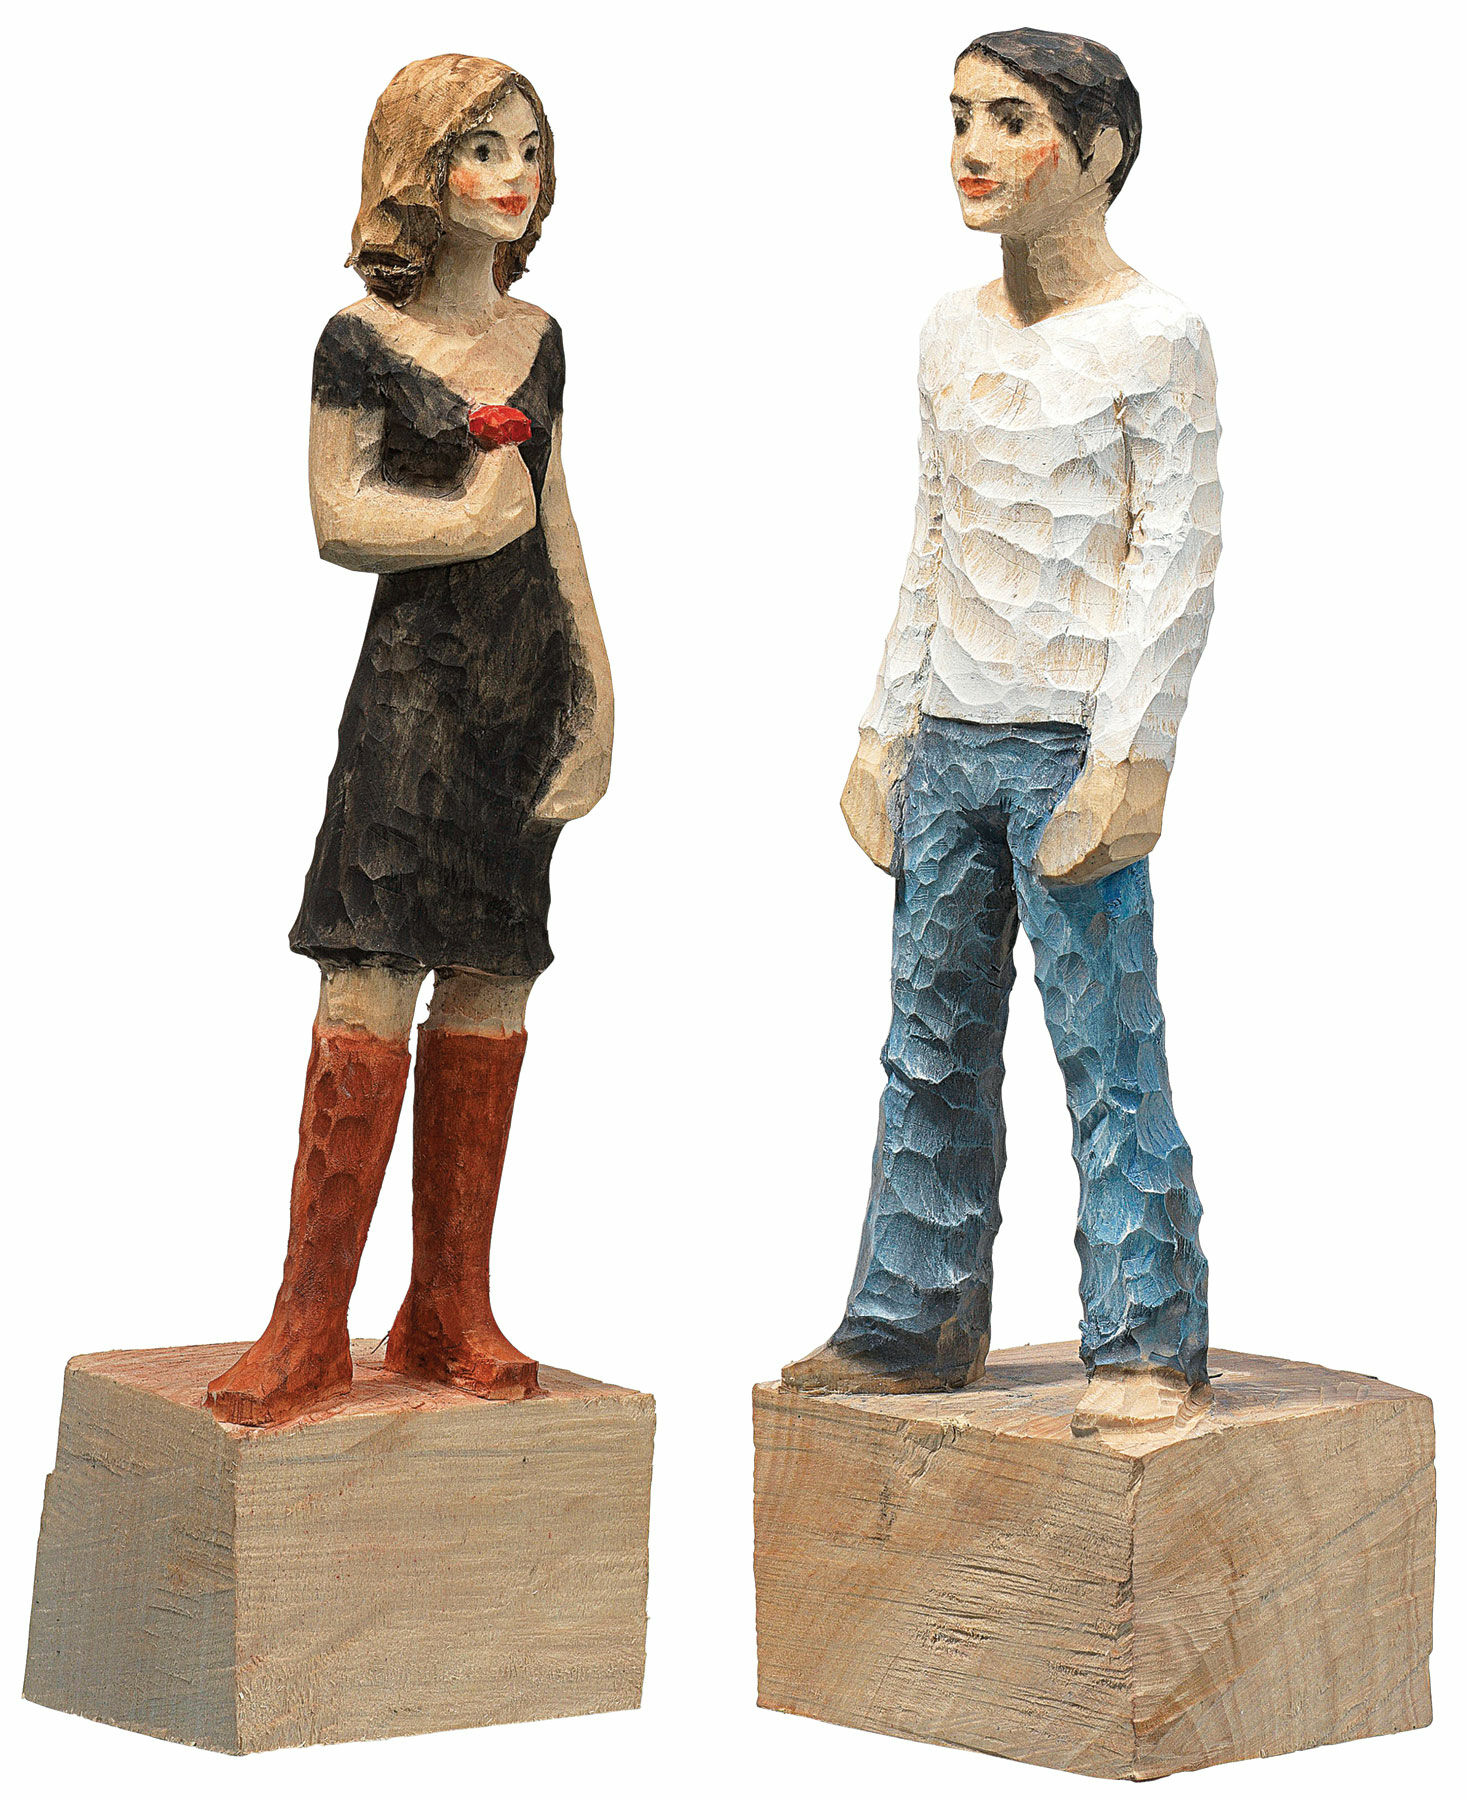 Sculpture pair "Woman" + "Man", cast wood finish by Michael Pickl